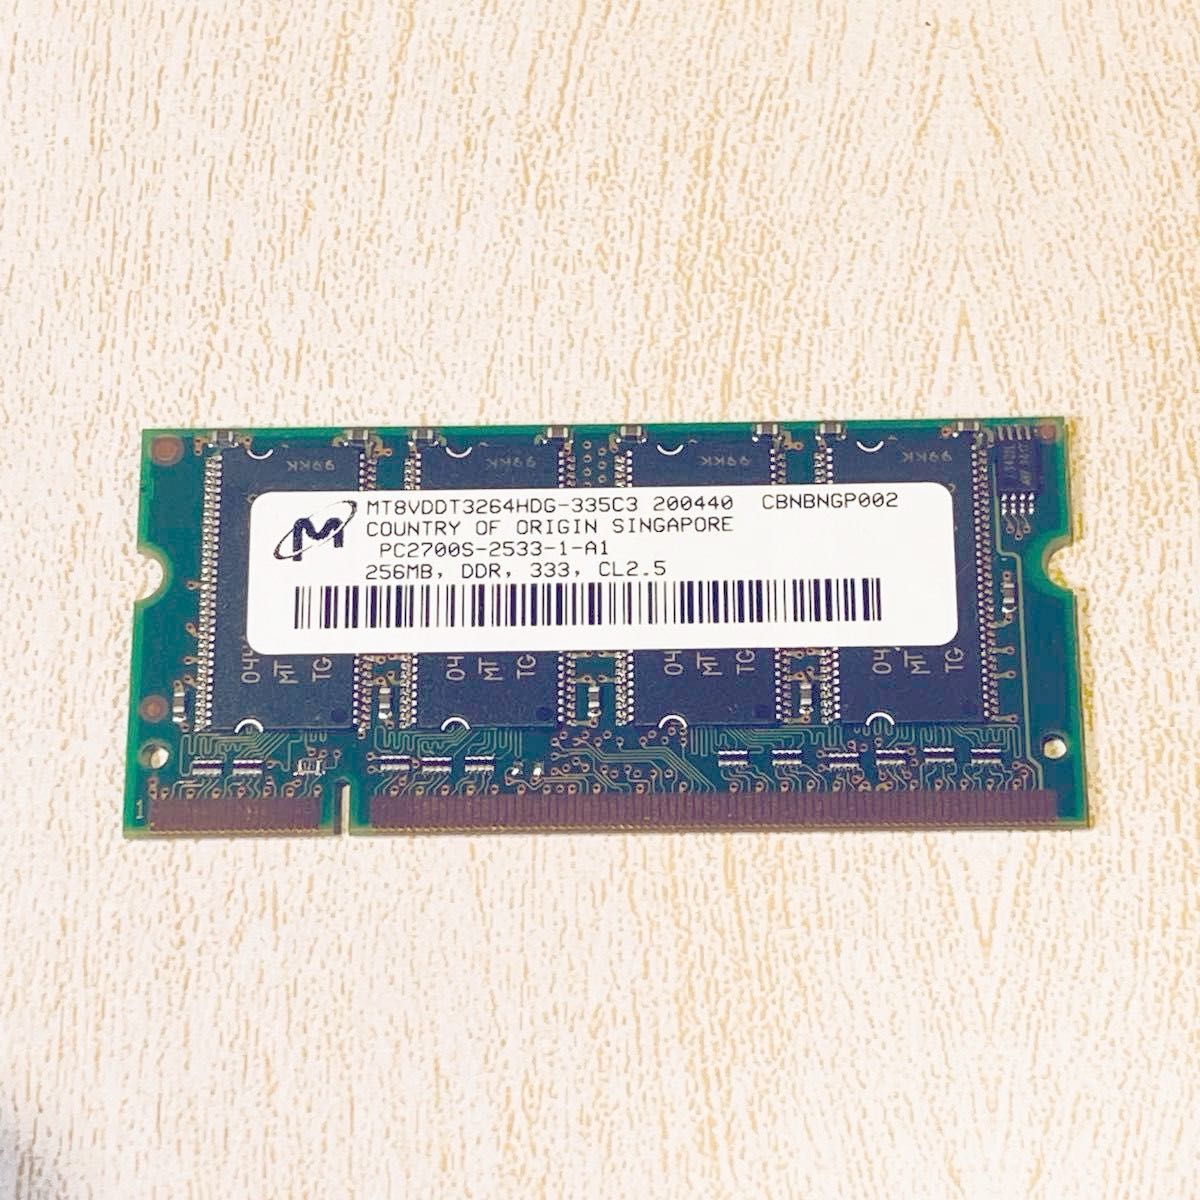 Micron ノートパソコン用メモリ DDR 333 256MB PC2700S MT8VDDT3264HDG-335C3